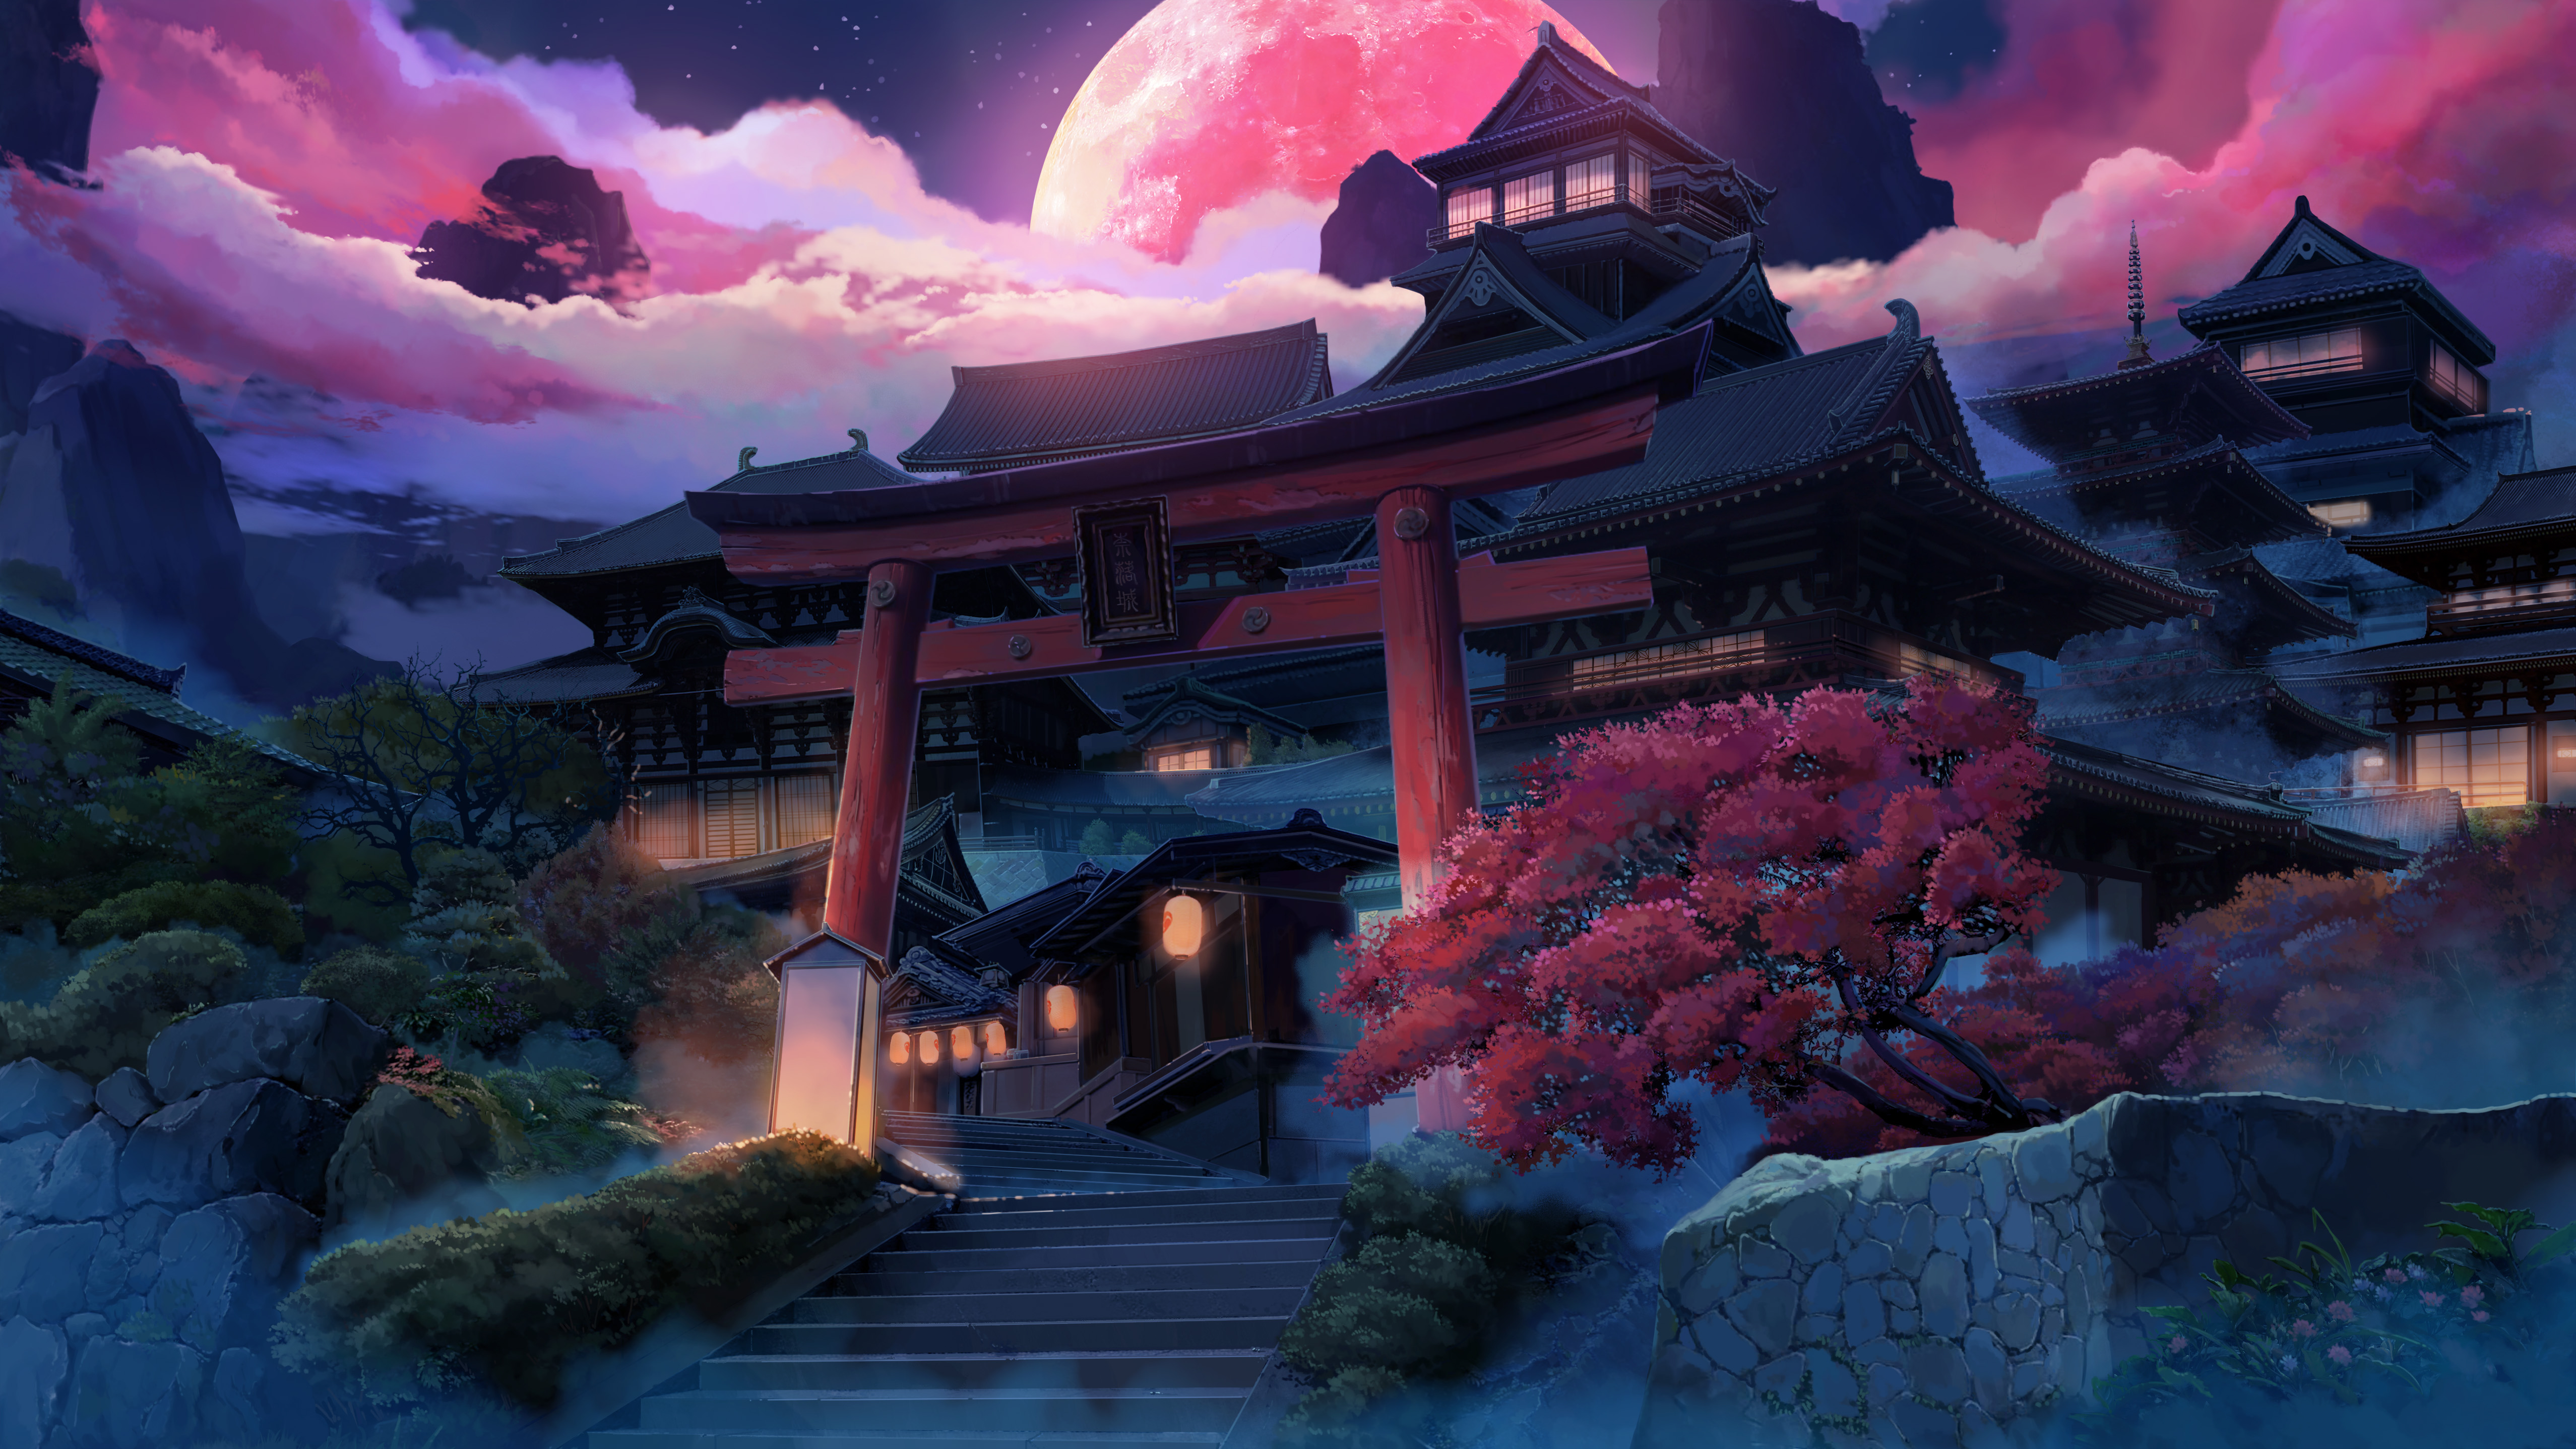 General 5111x2874 digital art artwork illustration environment night nightscape torii clouds Moon architecture building castle